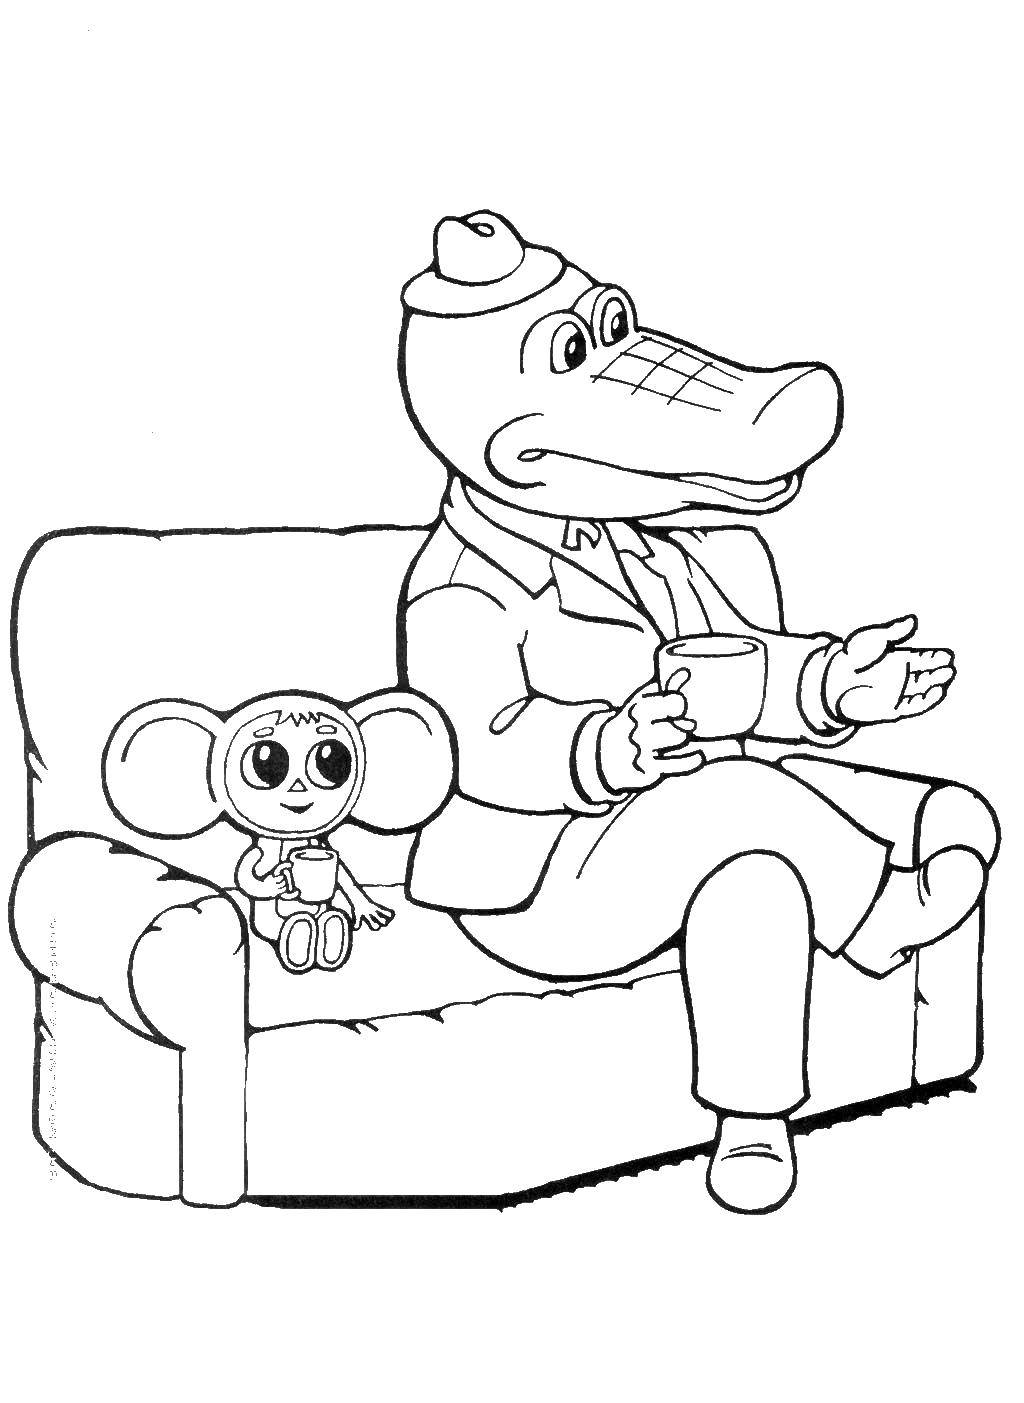 Coloring Crocodile Gena and Cheburashka on a sofa. Category cartoons. Tags:  cartoon, Crocodile Gena, Cheburashka.